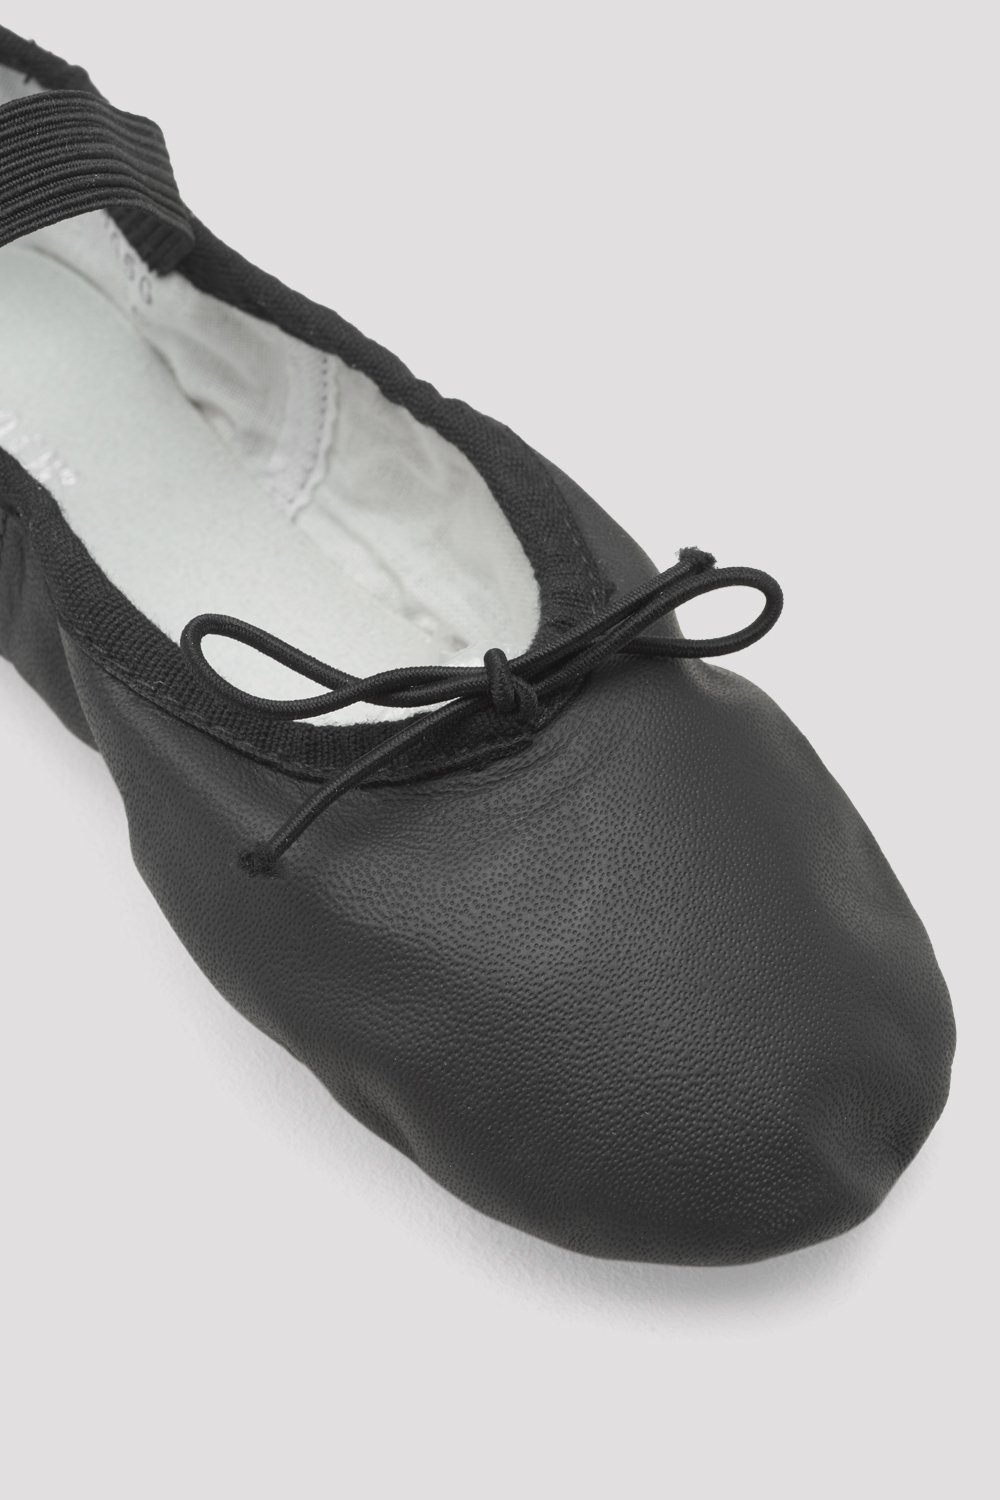 Bloch/Mirella Bloch Black Leather Full Sole Ballet Slippers - Child